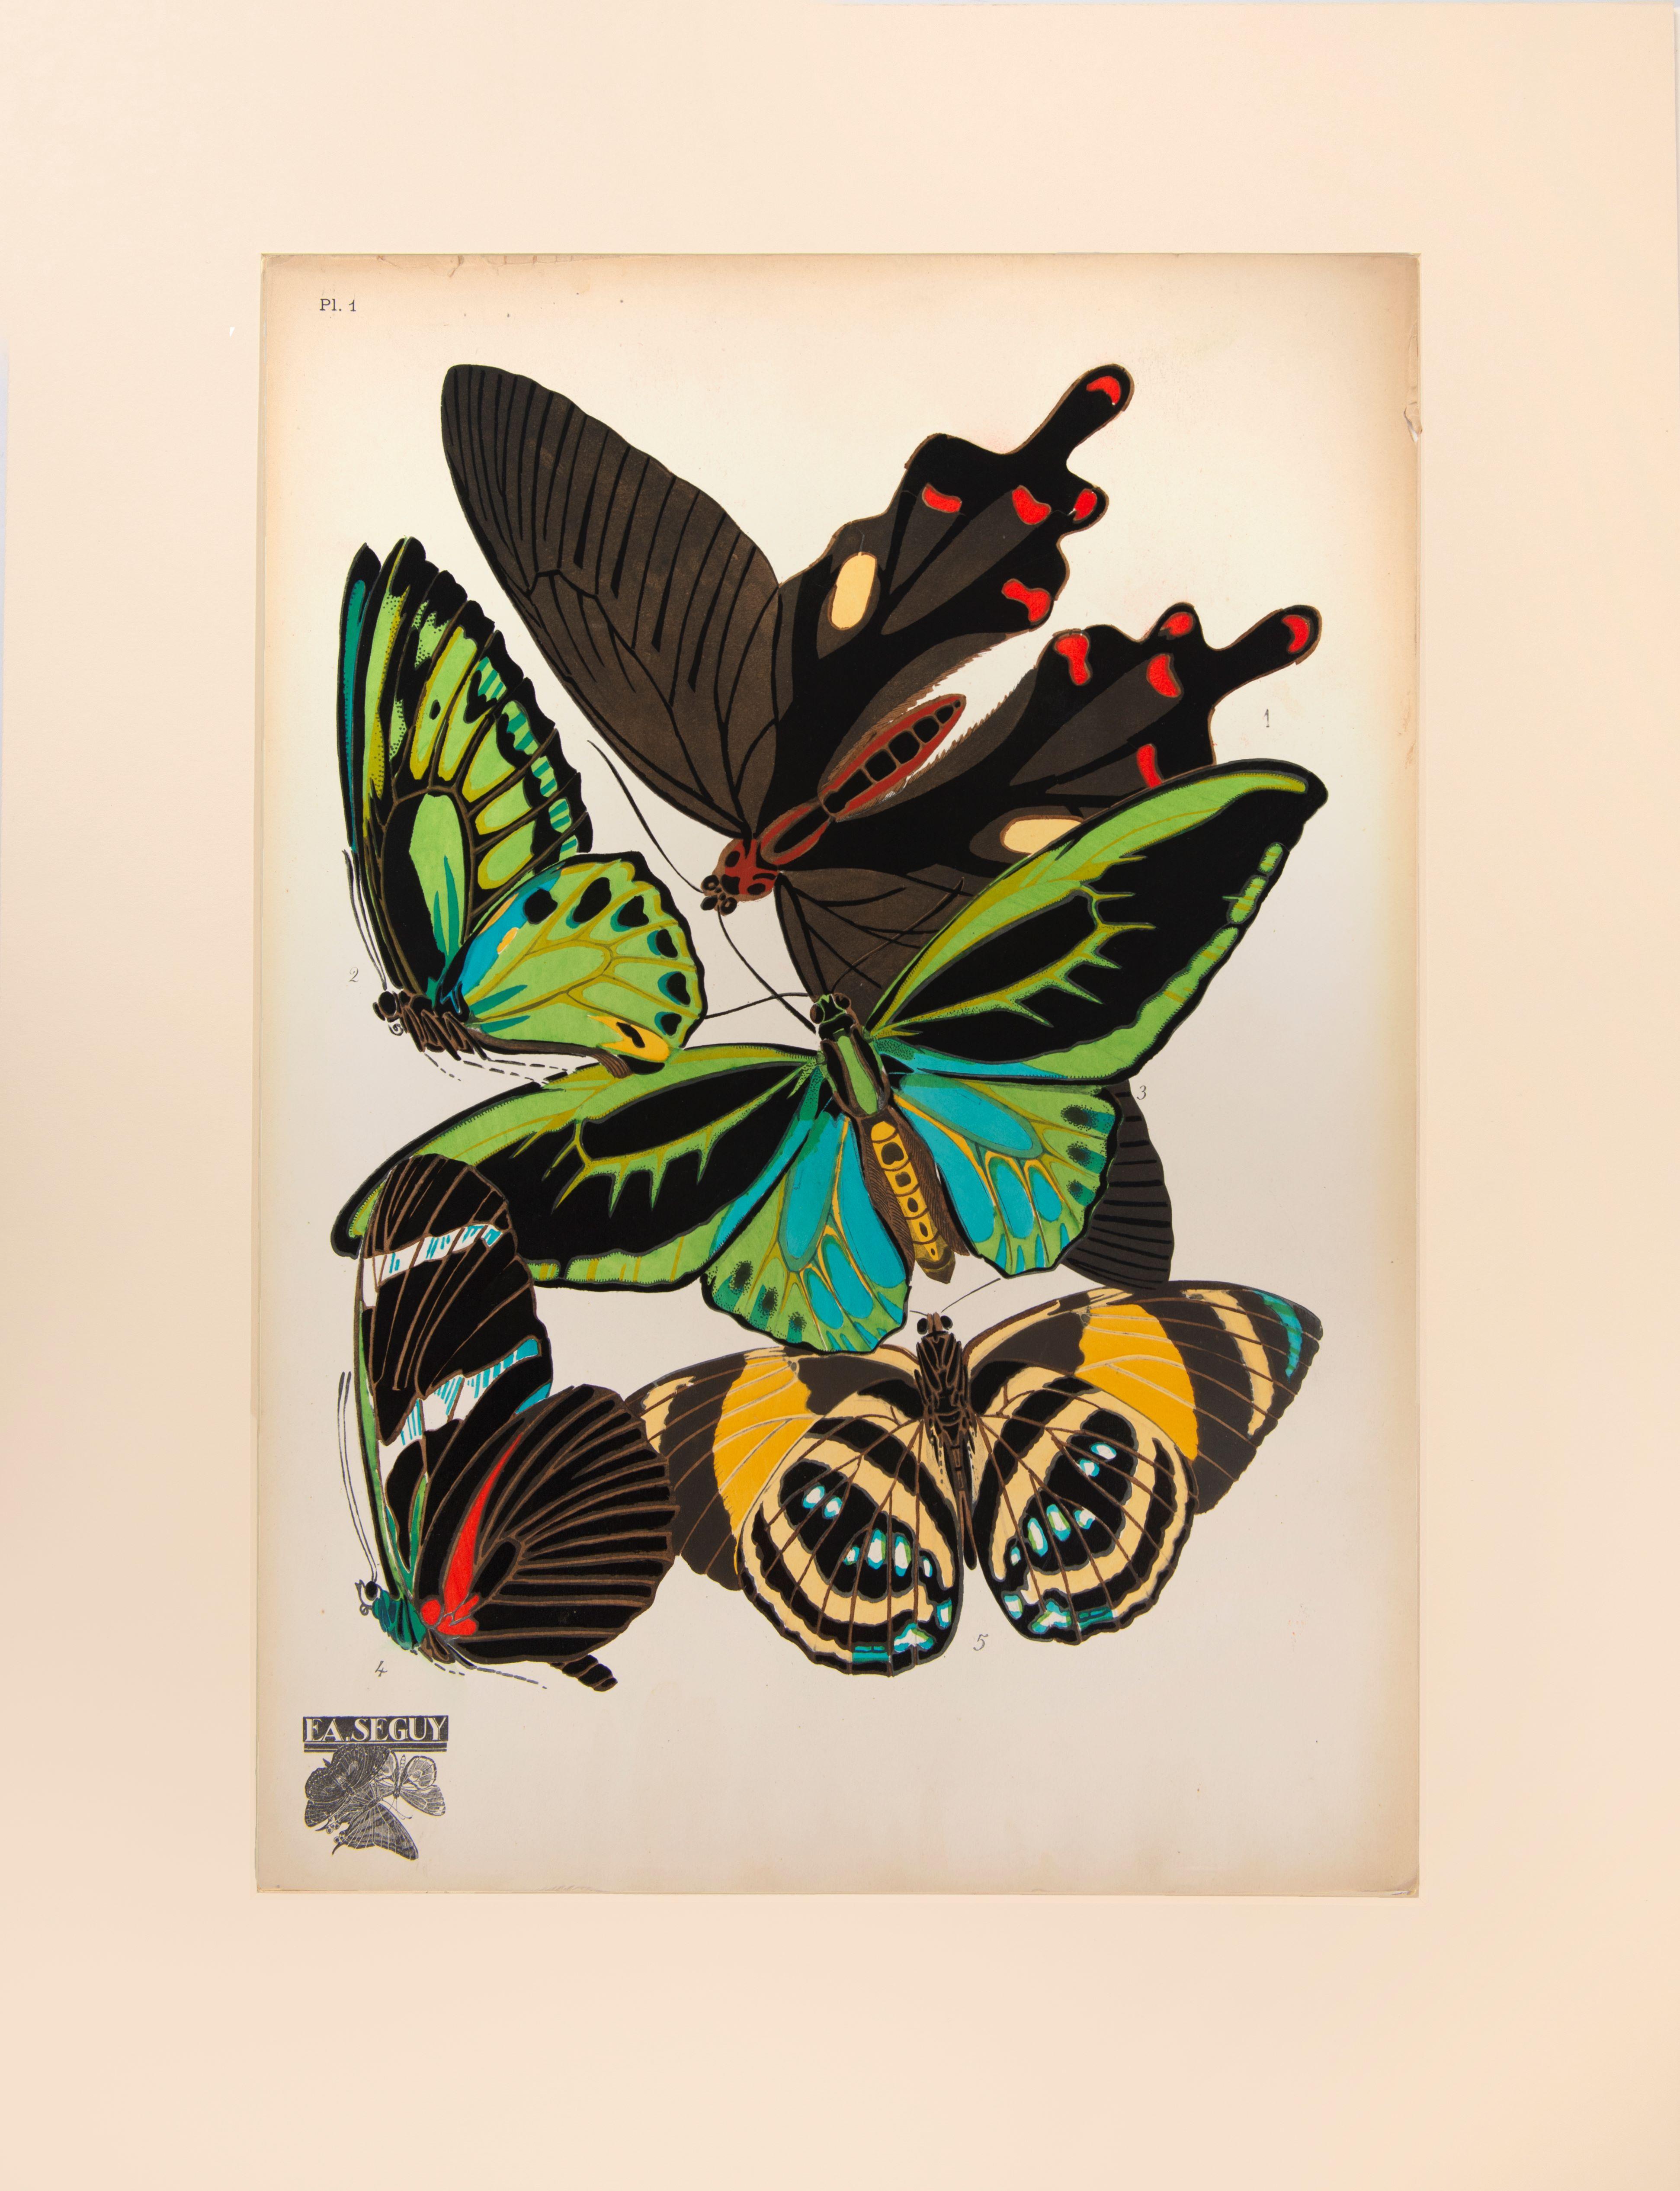 SEGUY, E[ugene] A[lain]. Animal Print - Papillons 